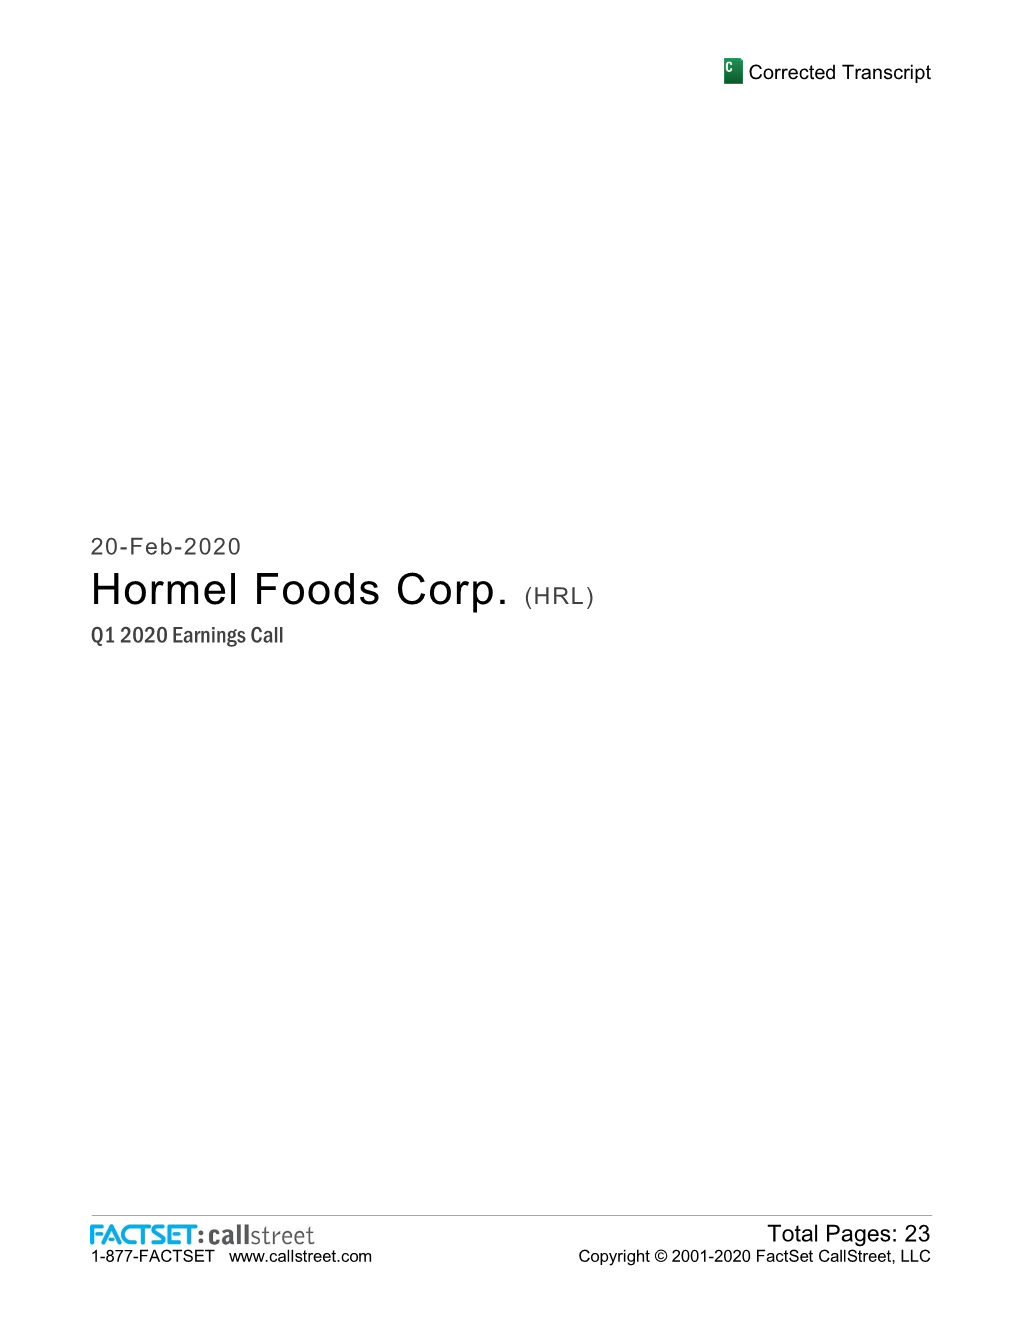 Hormel Foods Corp. (HRL) Q1 2020 Earnings Call